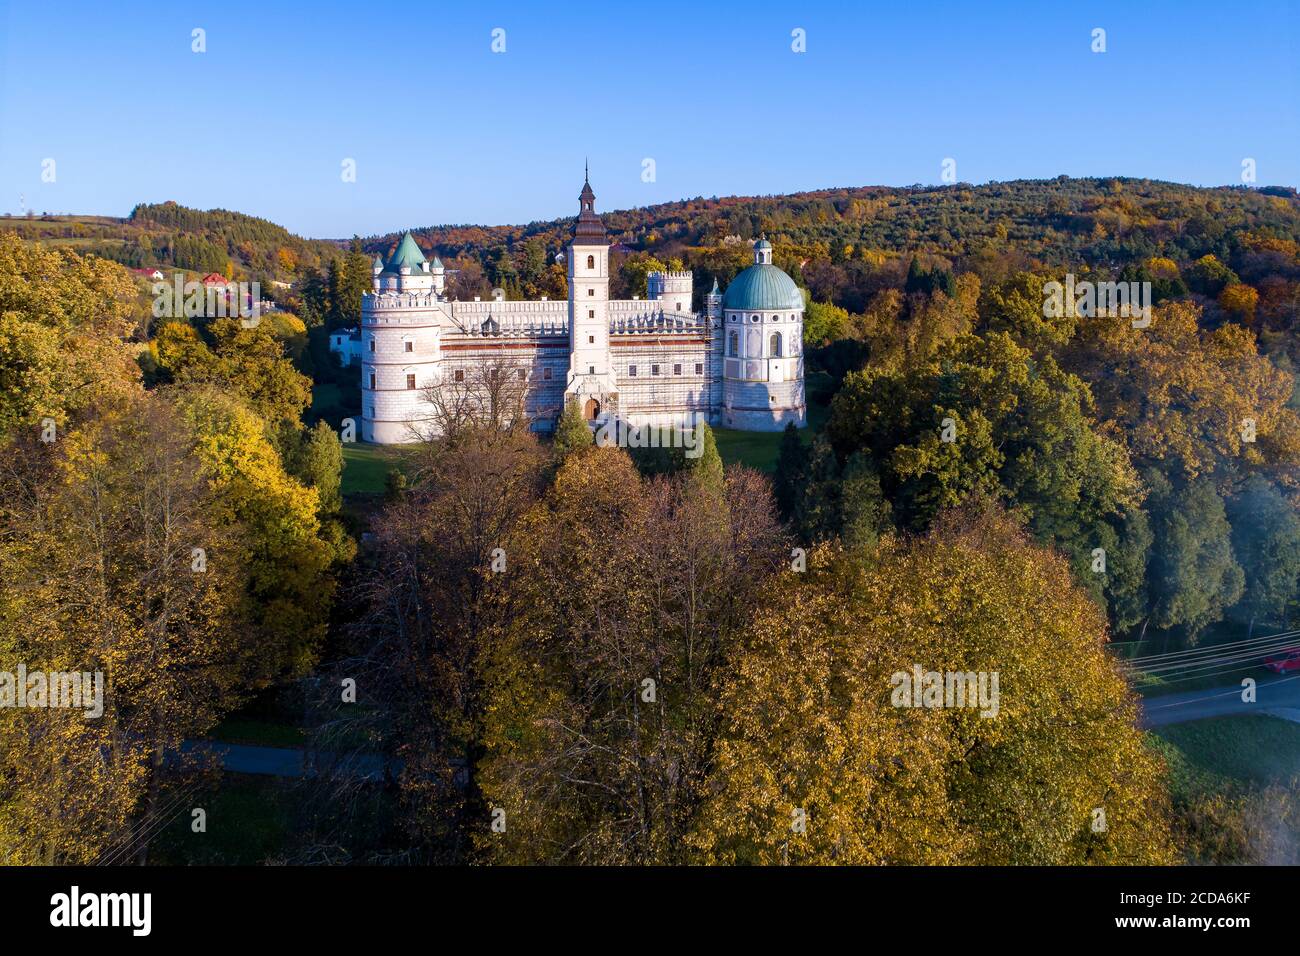 Renaissance castle and park in Krasiczyn near Przemysl , Poland. Aerial view in fall in sunset light Stock Photo